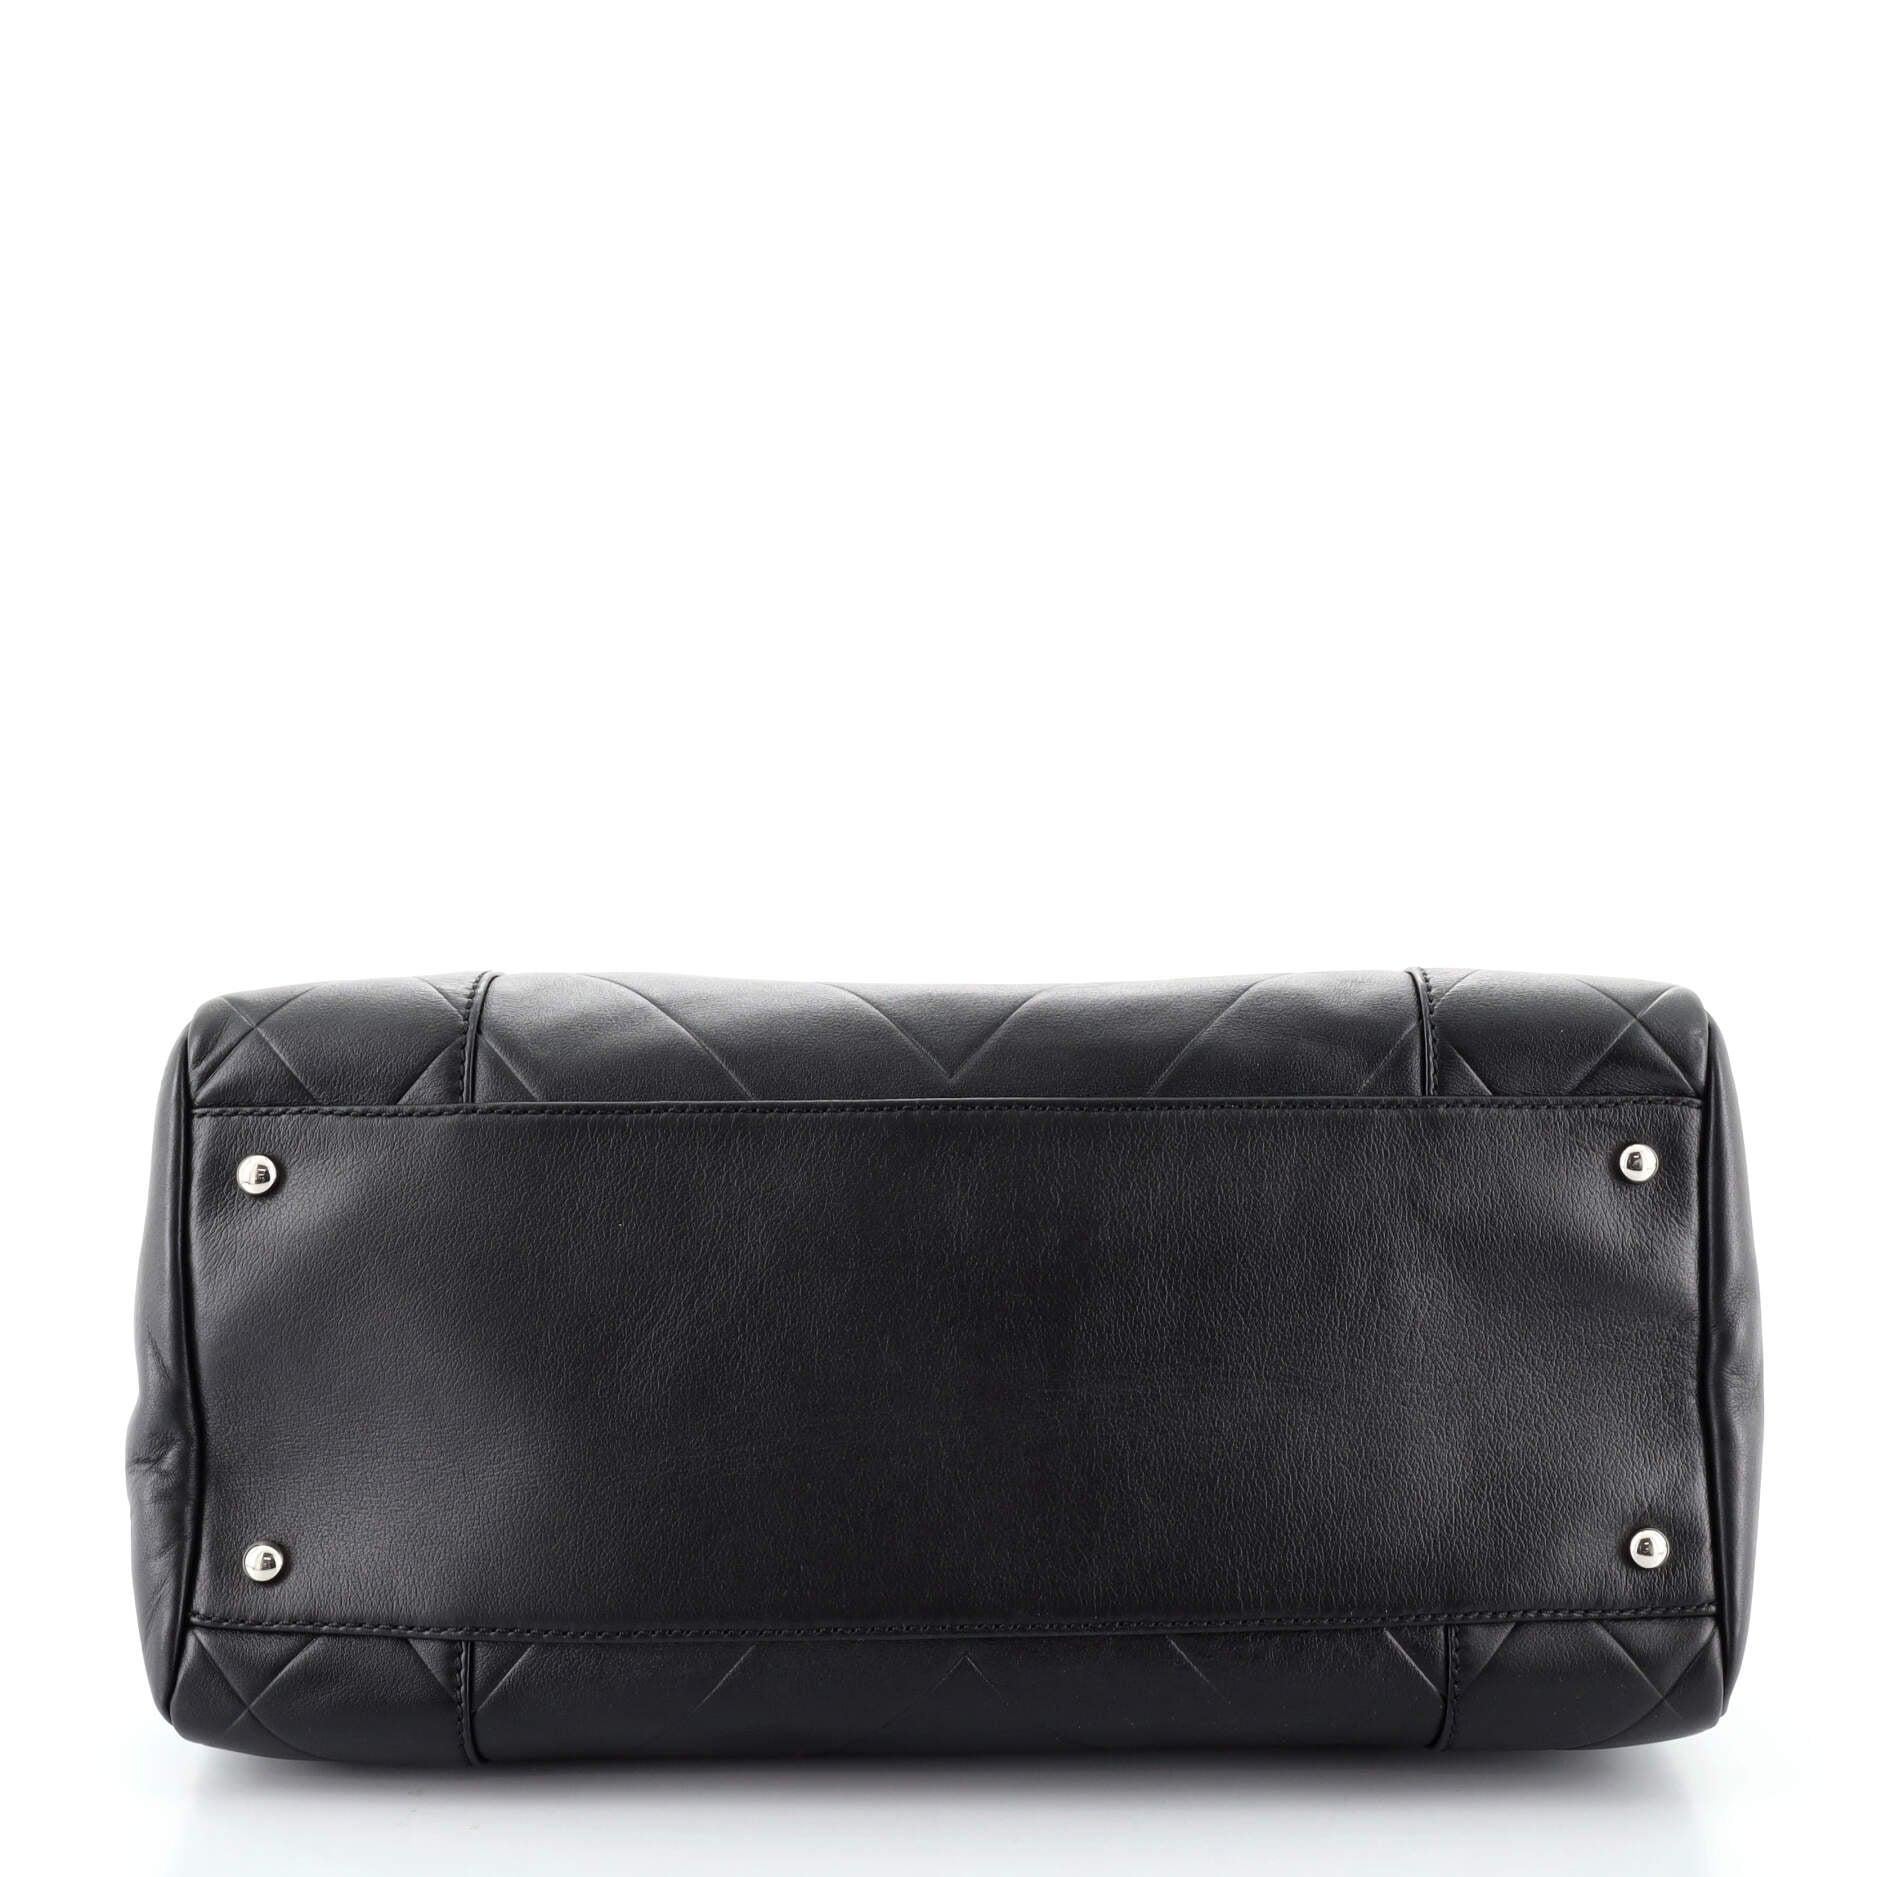 Black Chanel All Day Long Bowler Bag Chevron Leather Medium